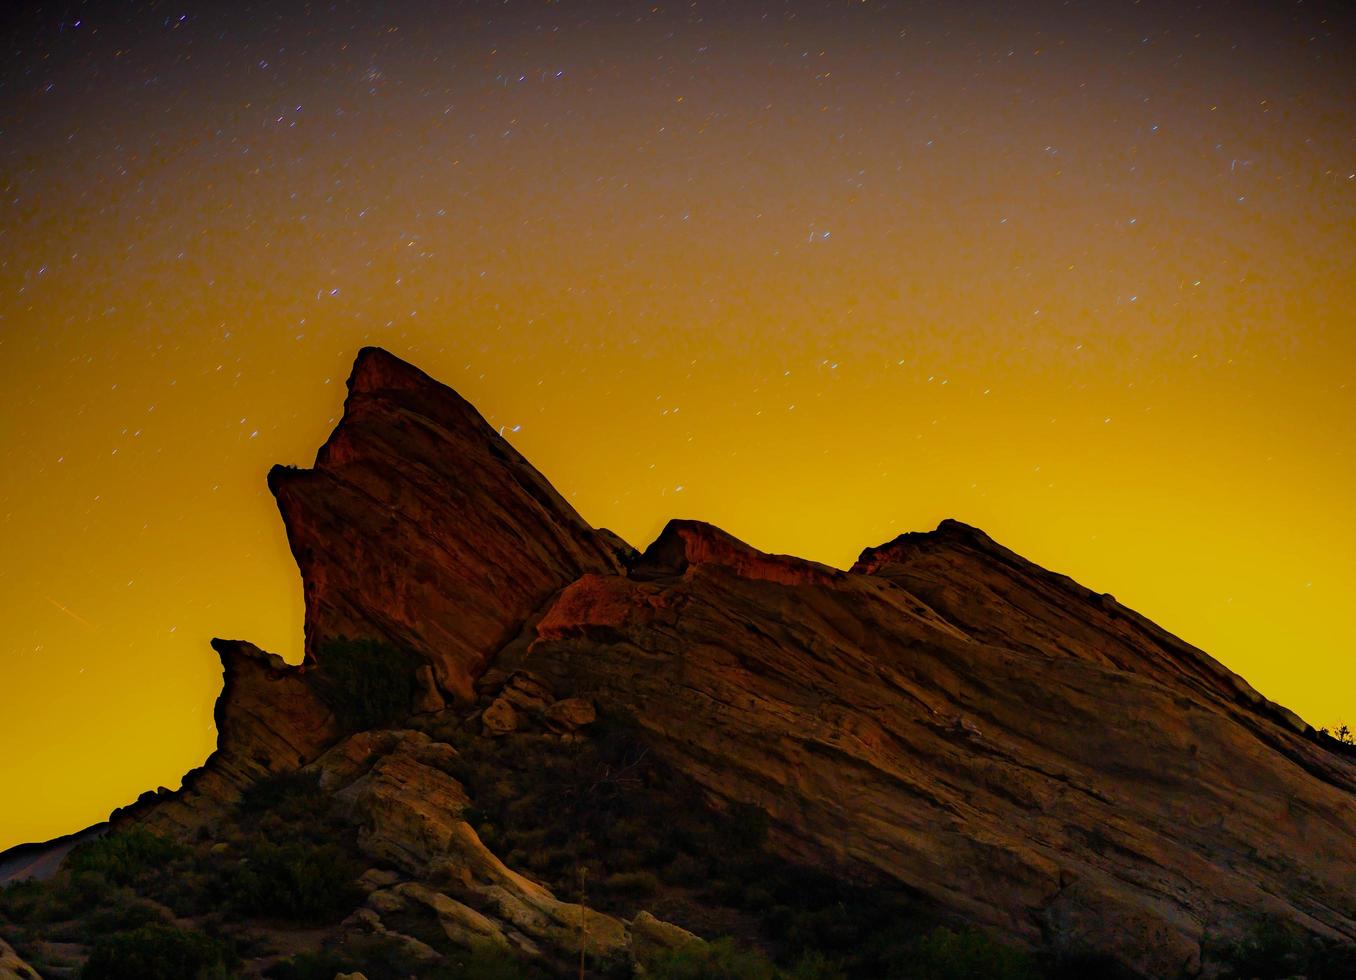 vasquez rotsen gedurende een warm sterrenhemel nacht foto